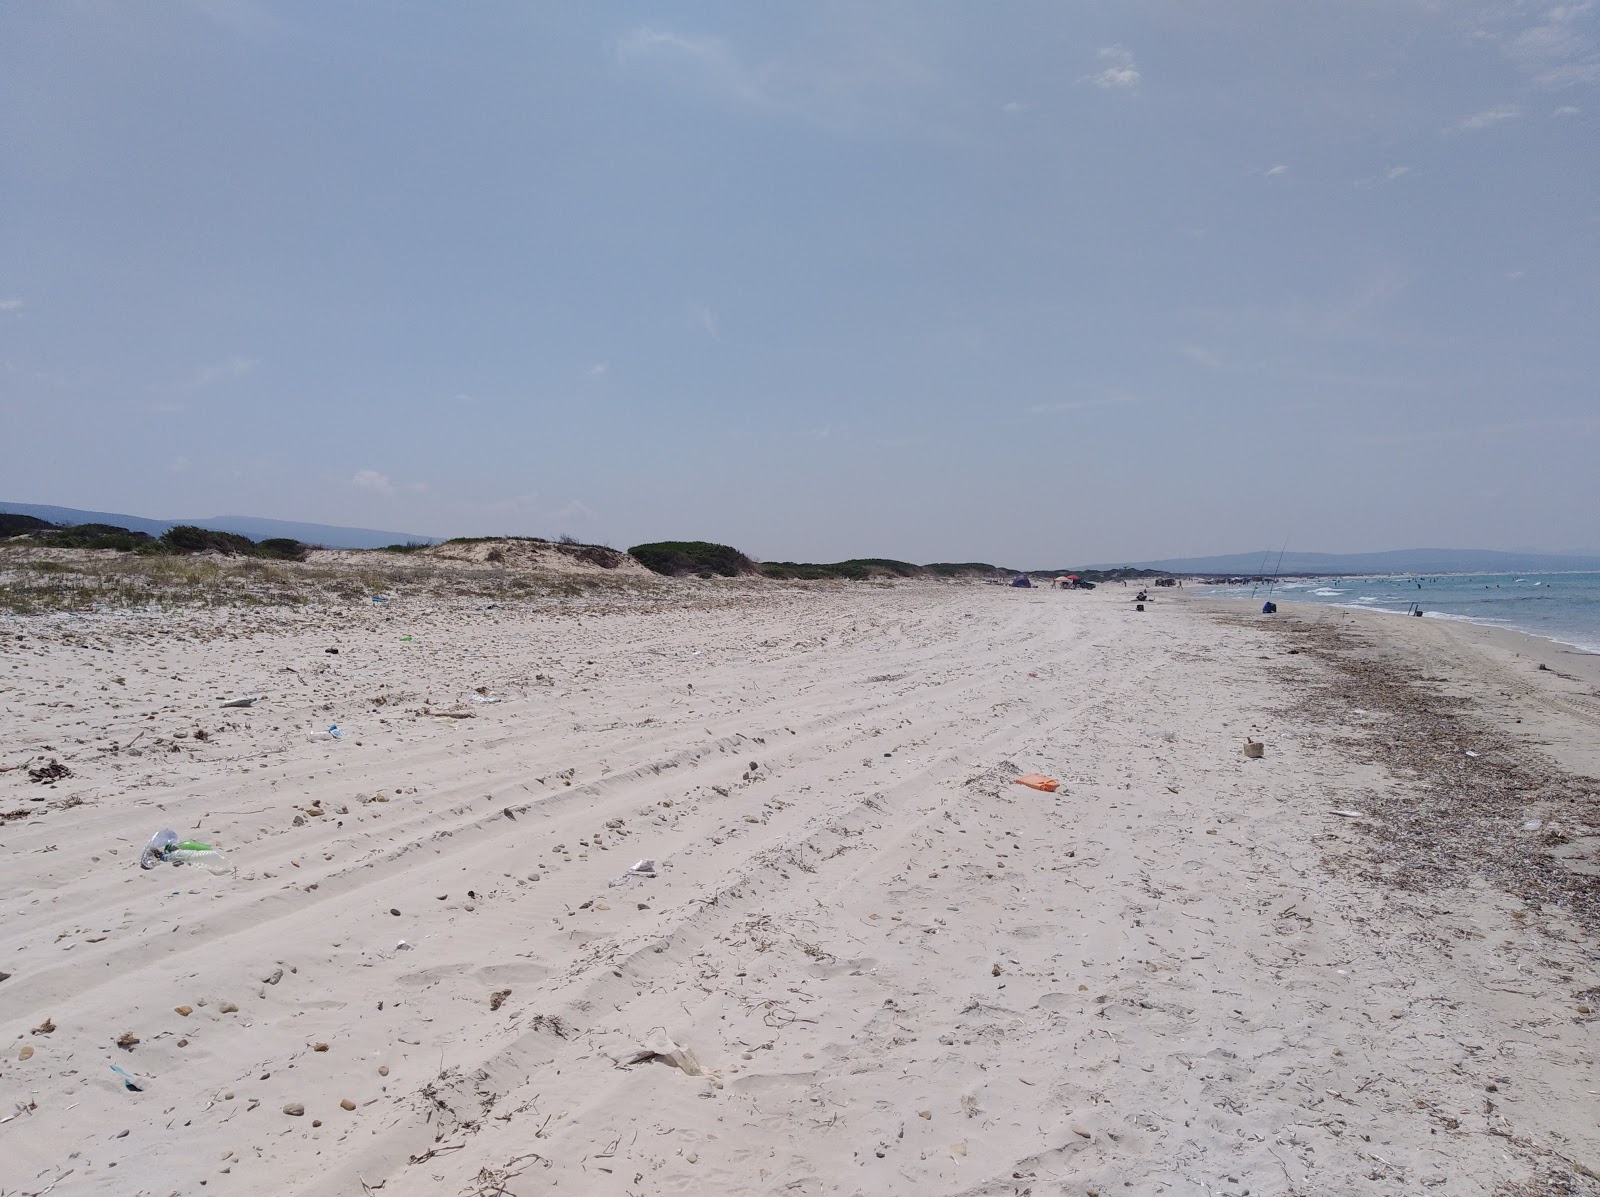 Fotografija Monotonous Beach z turkizna čista voda površino